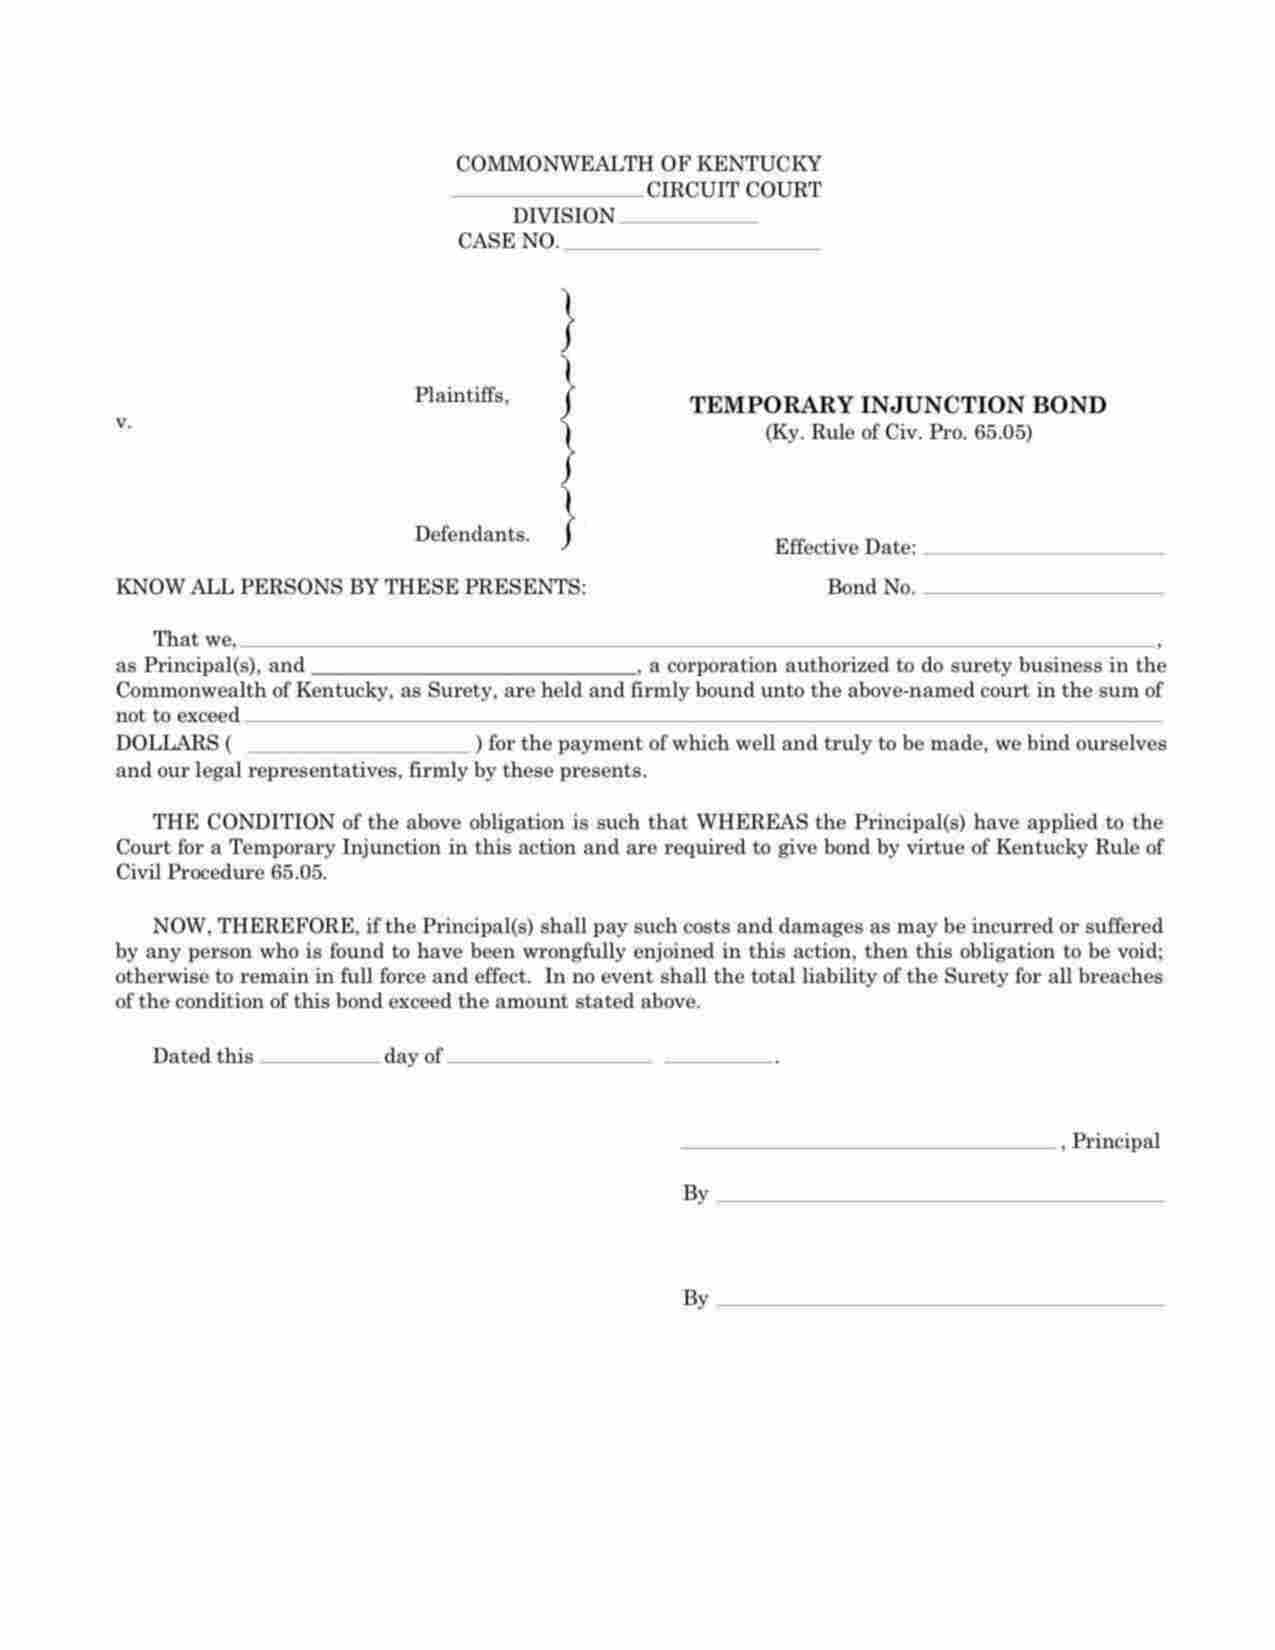 Kentucky Temporary Injunction Bond Form